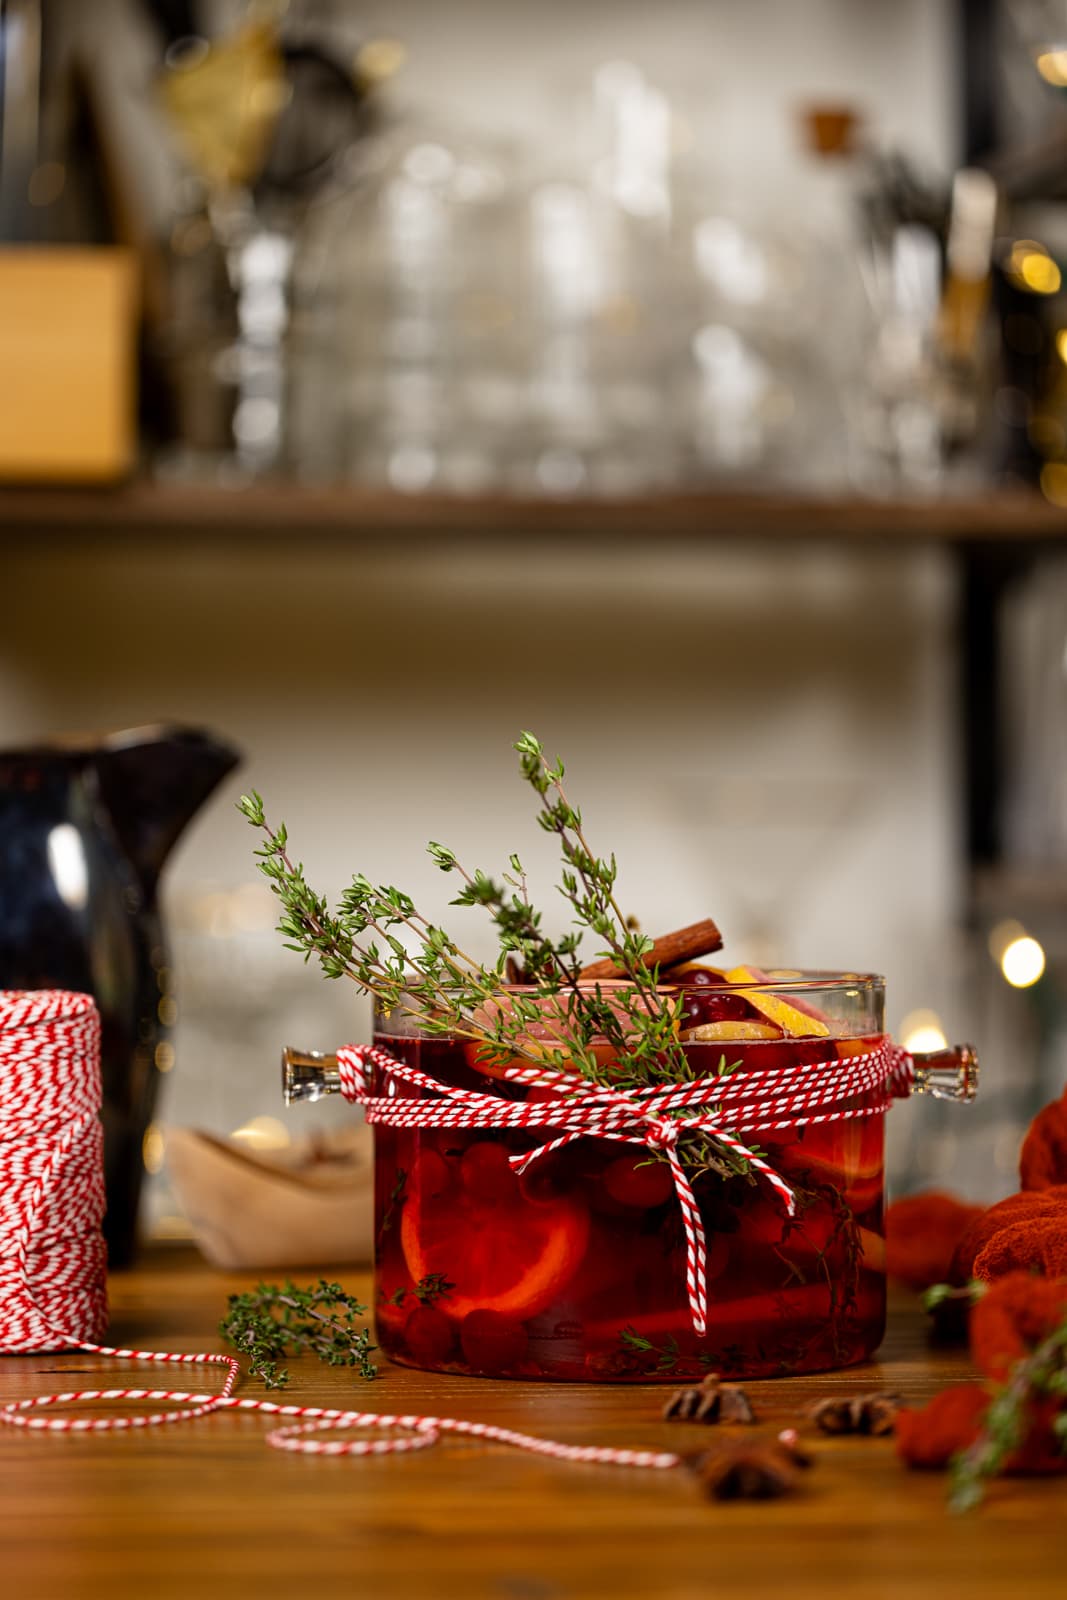 Easy Christmas Simmer Pots to Make House Smell Festive